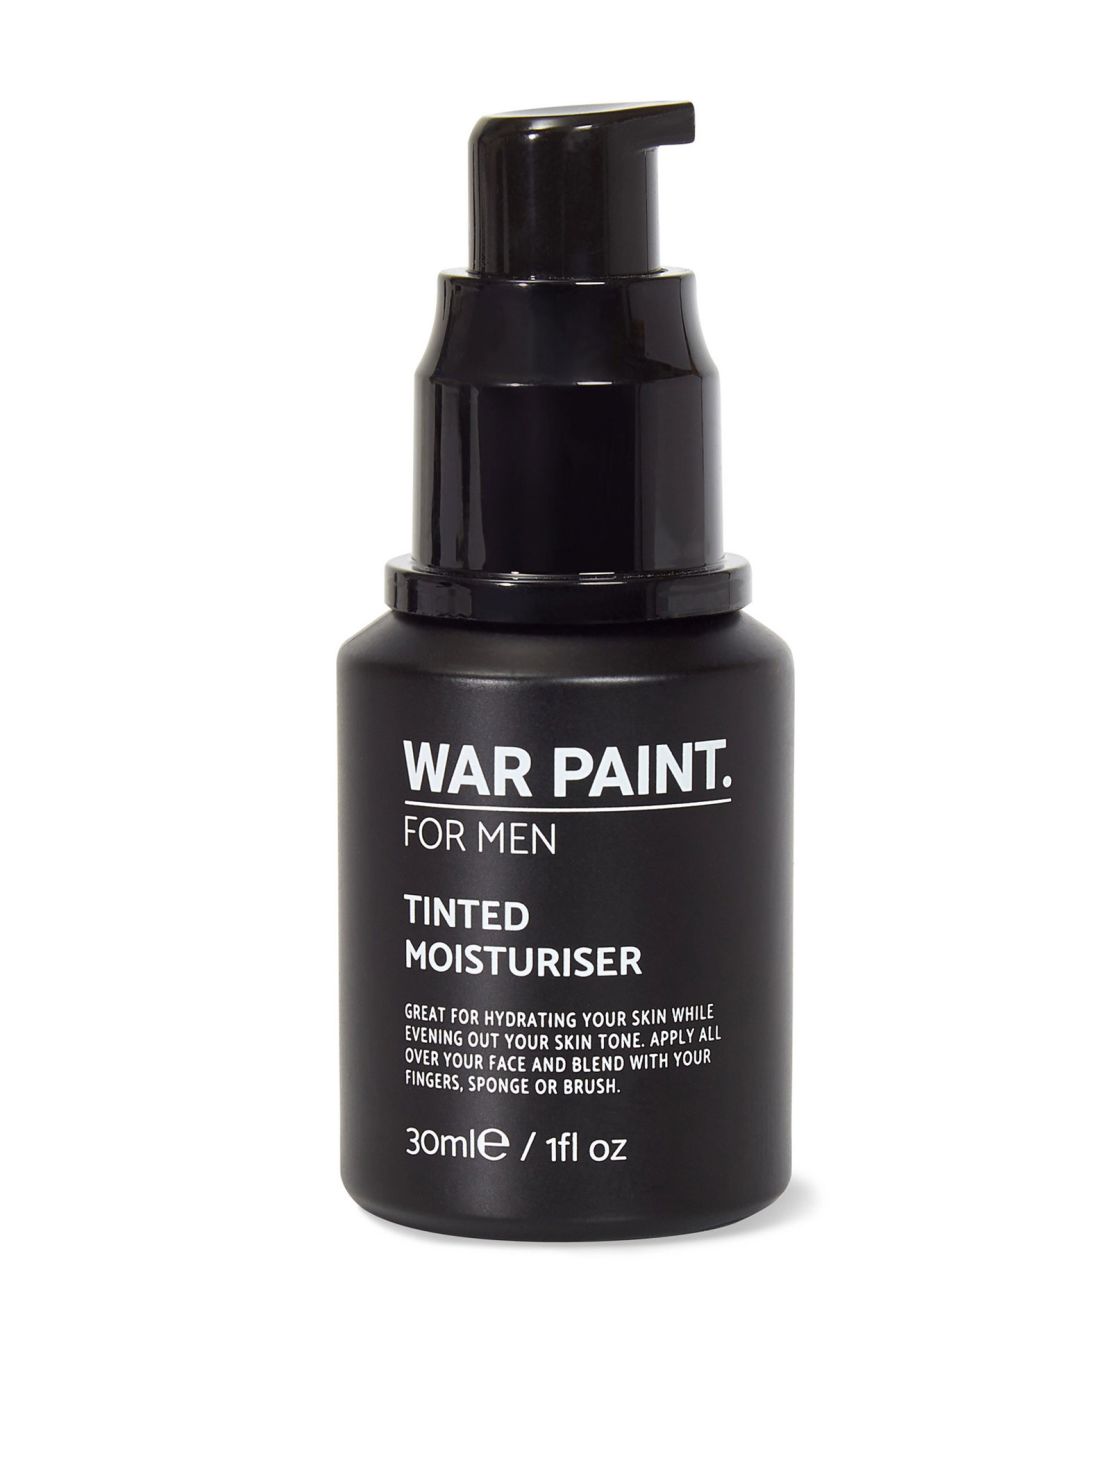 A bottle of War Paint For Men's tinted moisturizer.